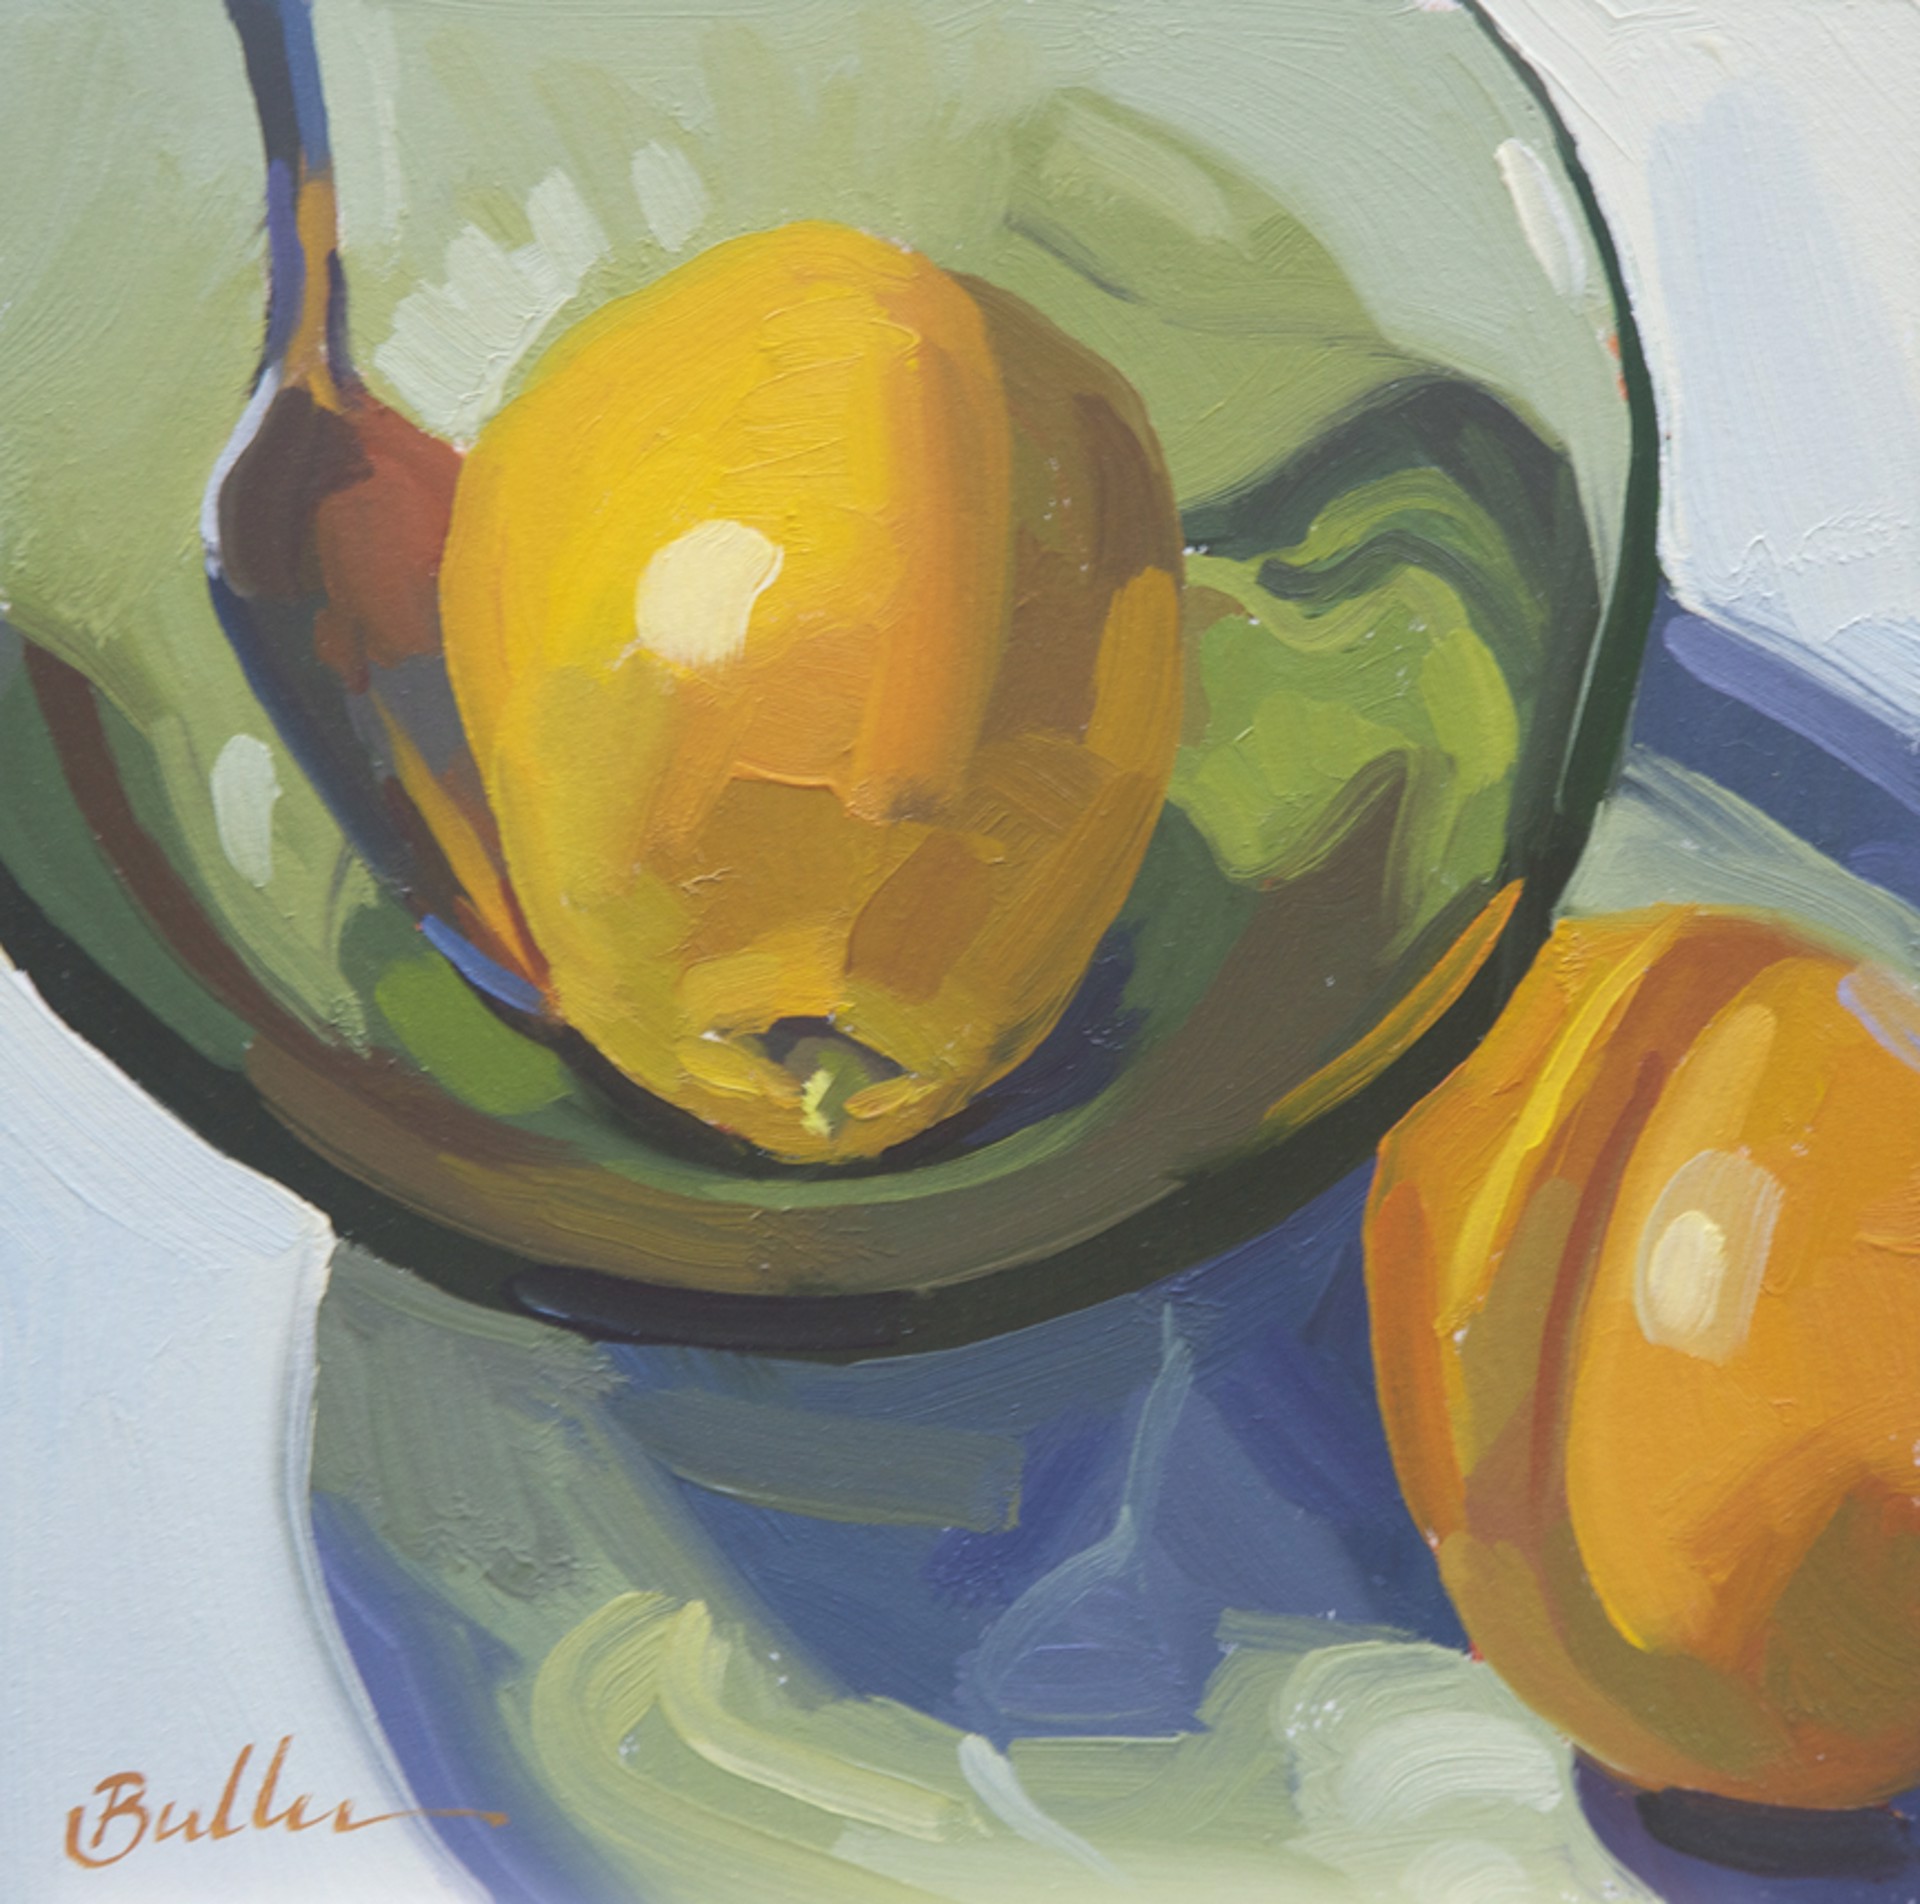 Lemon in a Green Bowl by Samantha Buller